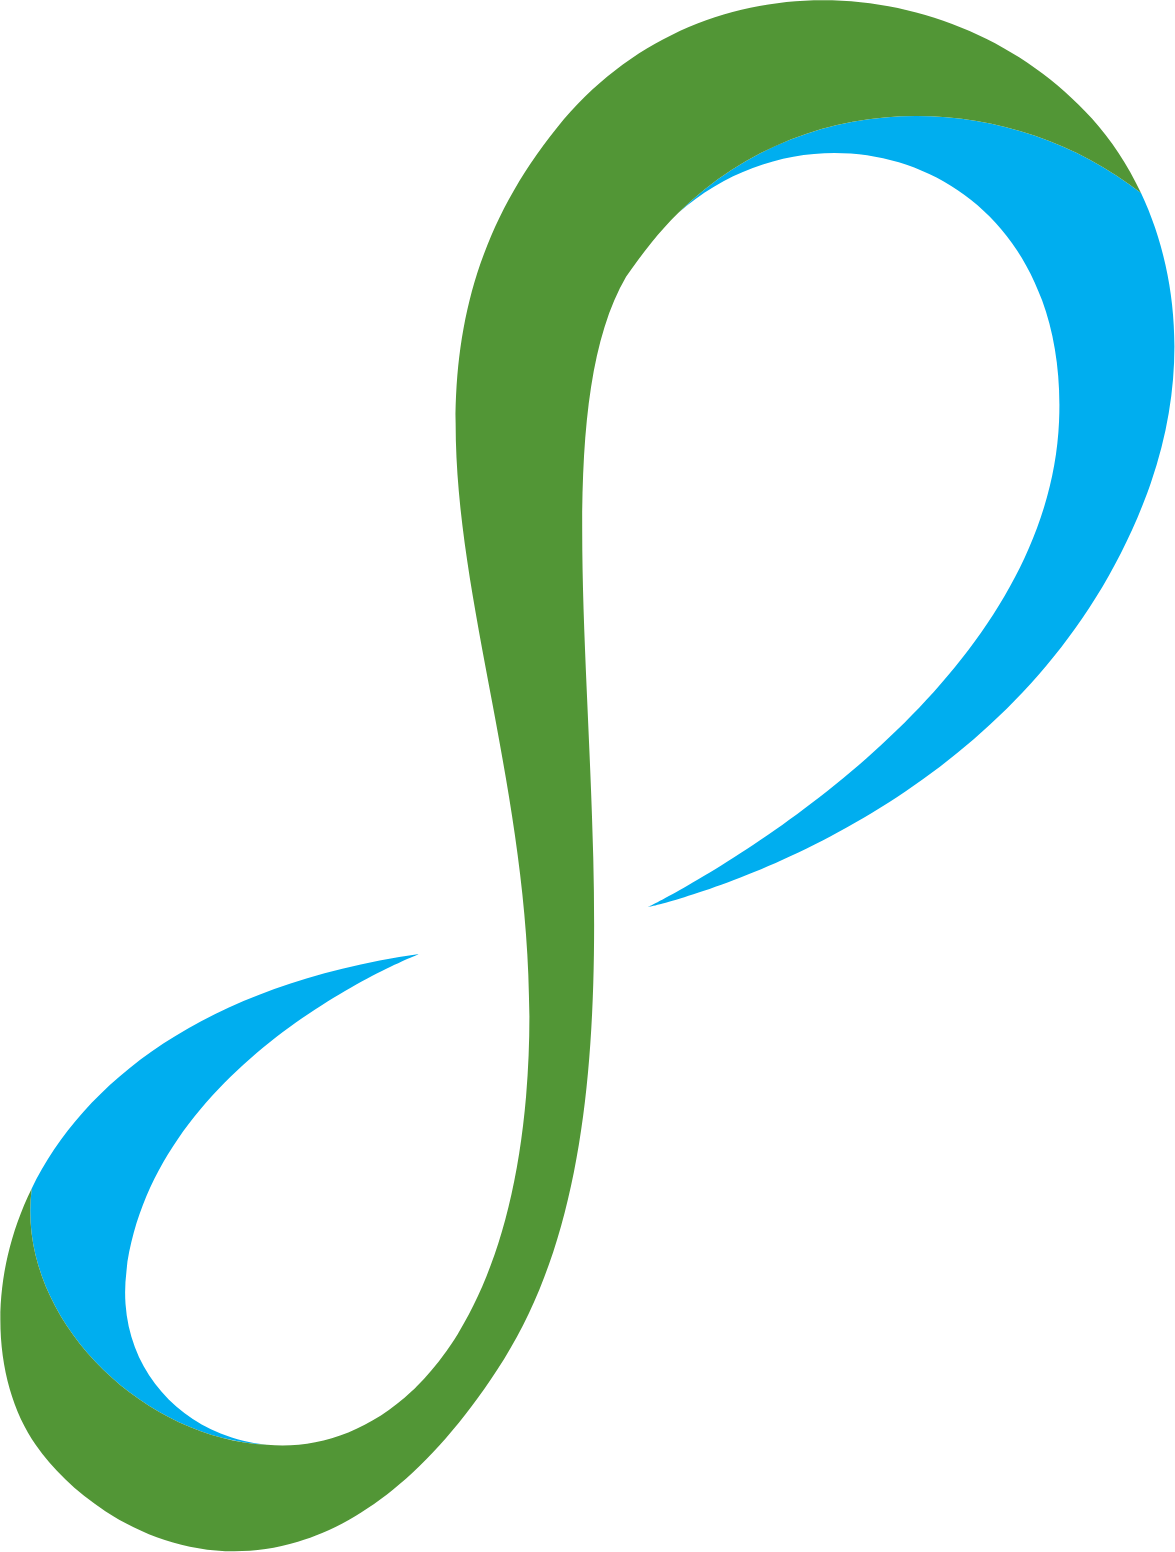 Aeterna Zentaris logo (transparent PNG)